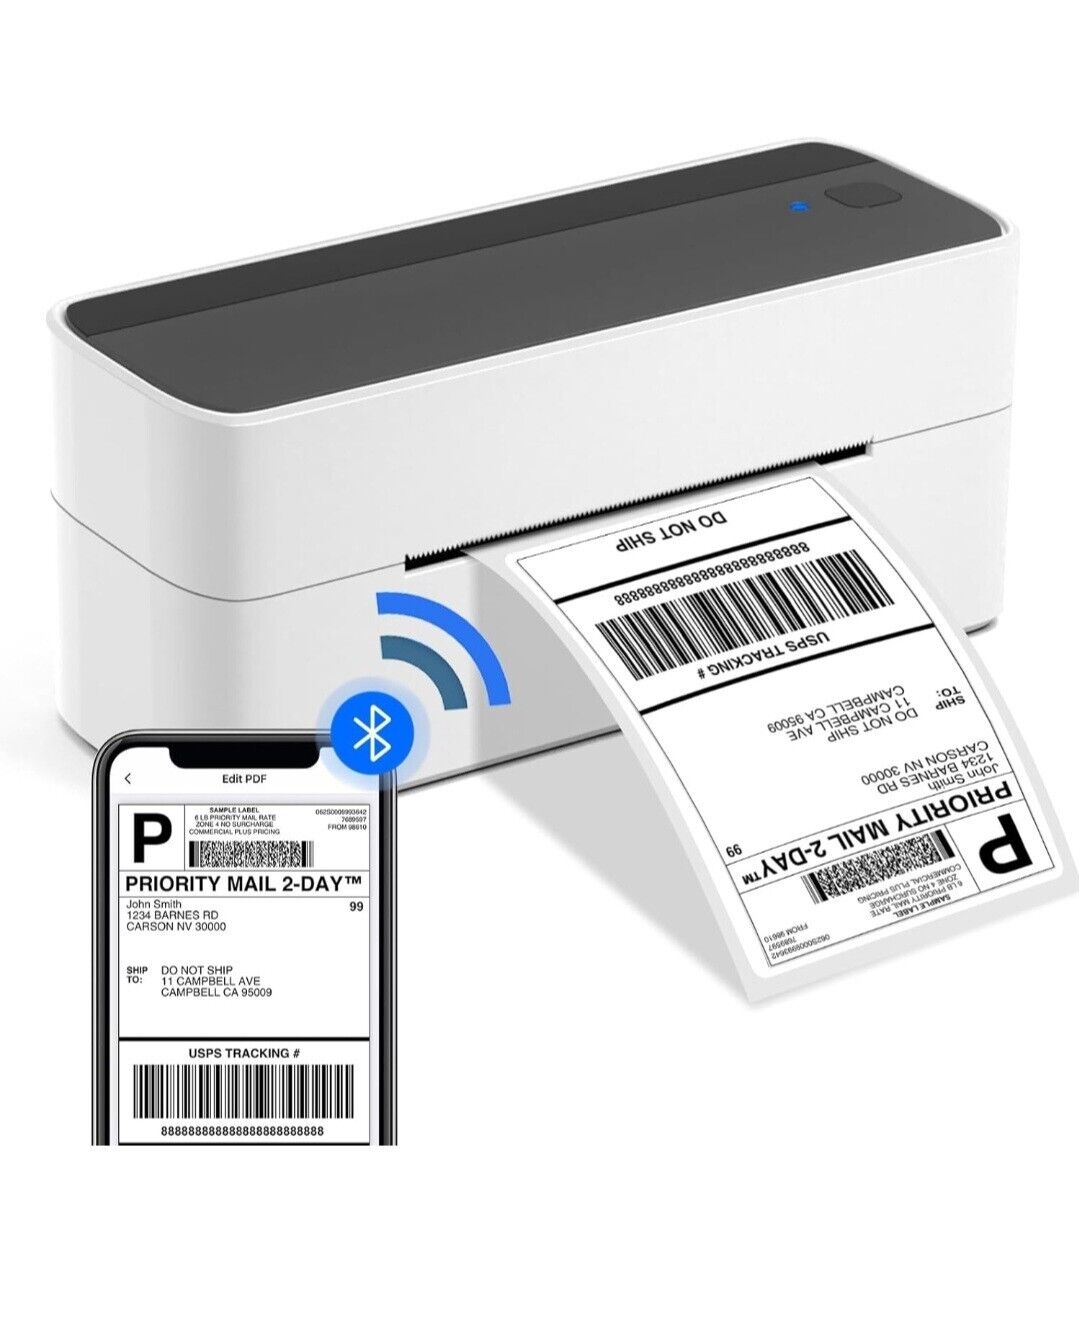 Phomemo Bluetooth Thermal Label Printer 4x6, Wireless Shipping Label Printer